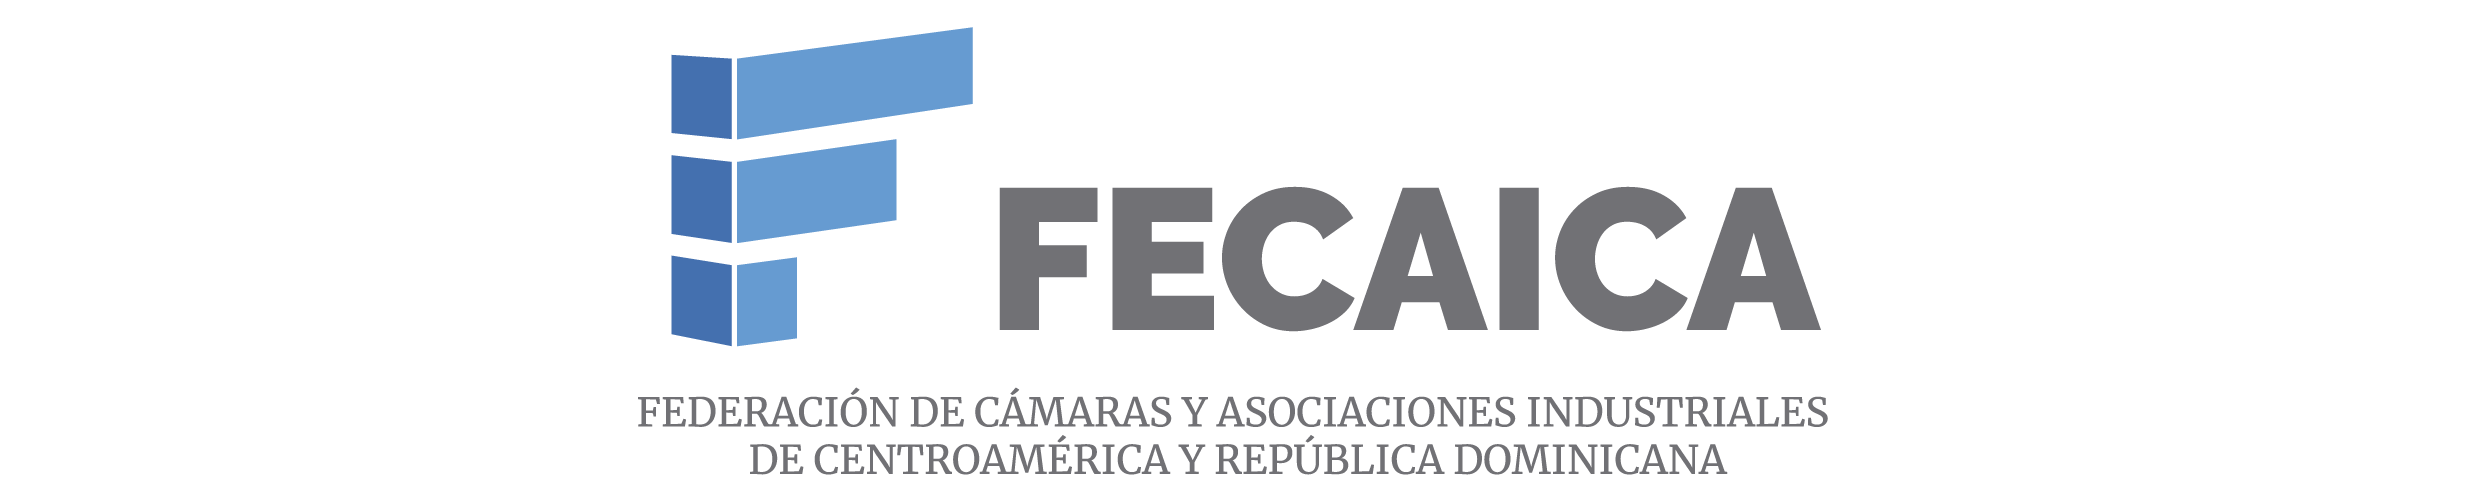 Logotipo-Fecaica-web (1)